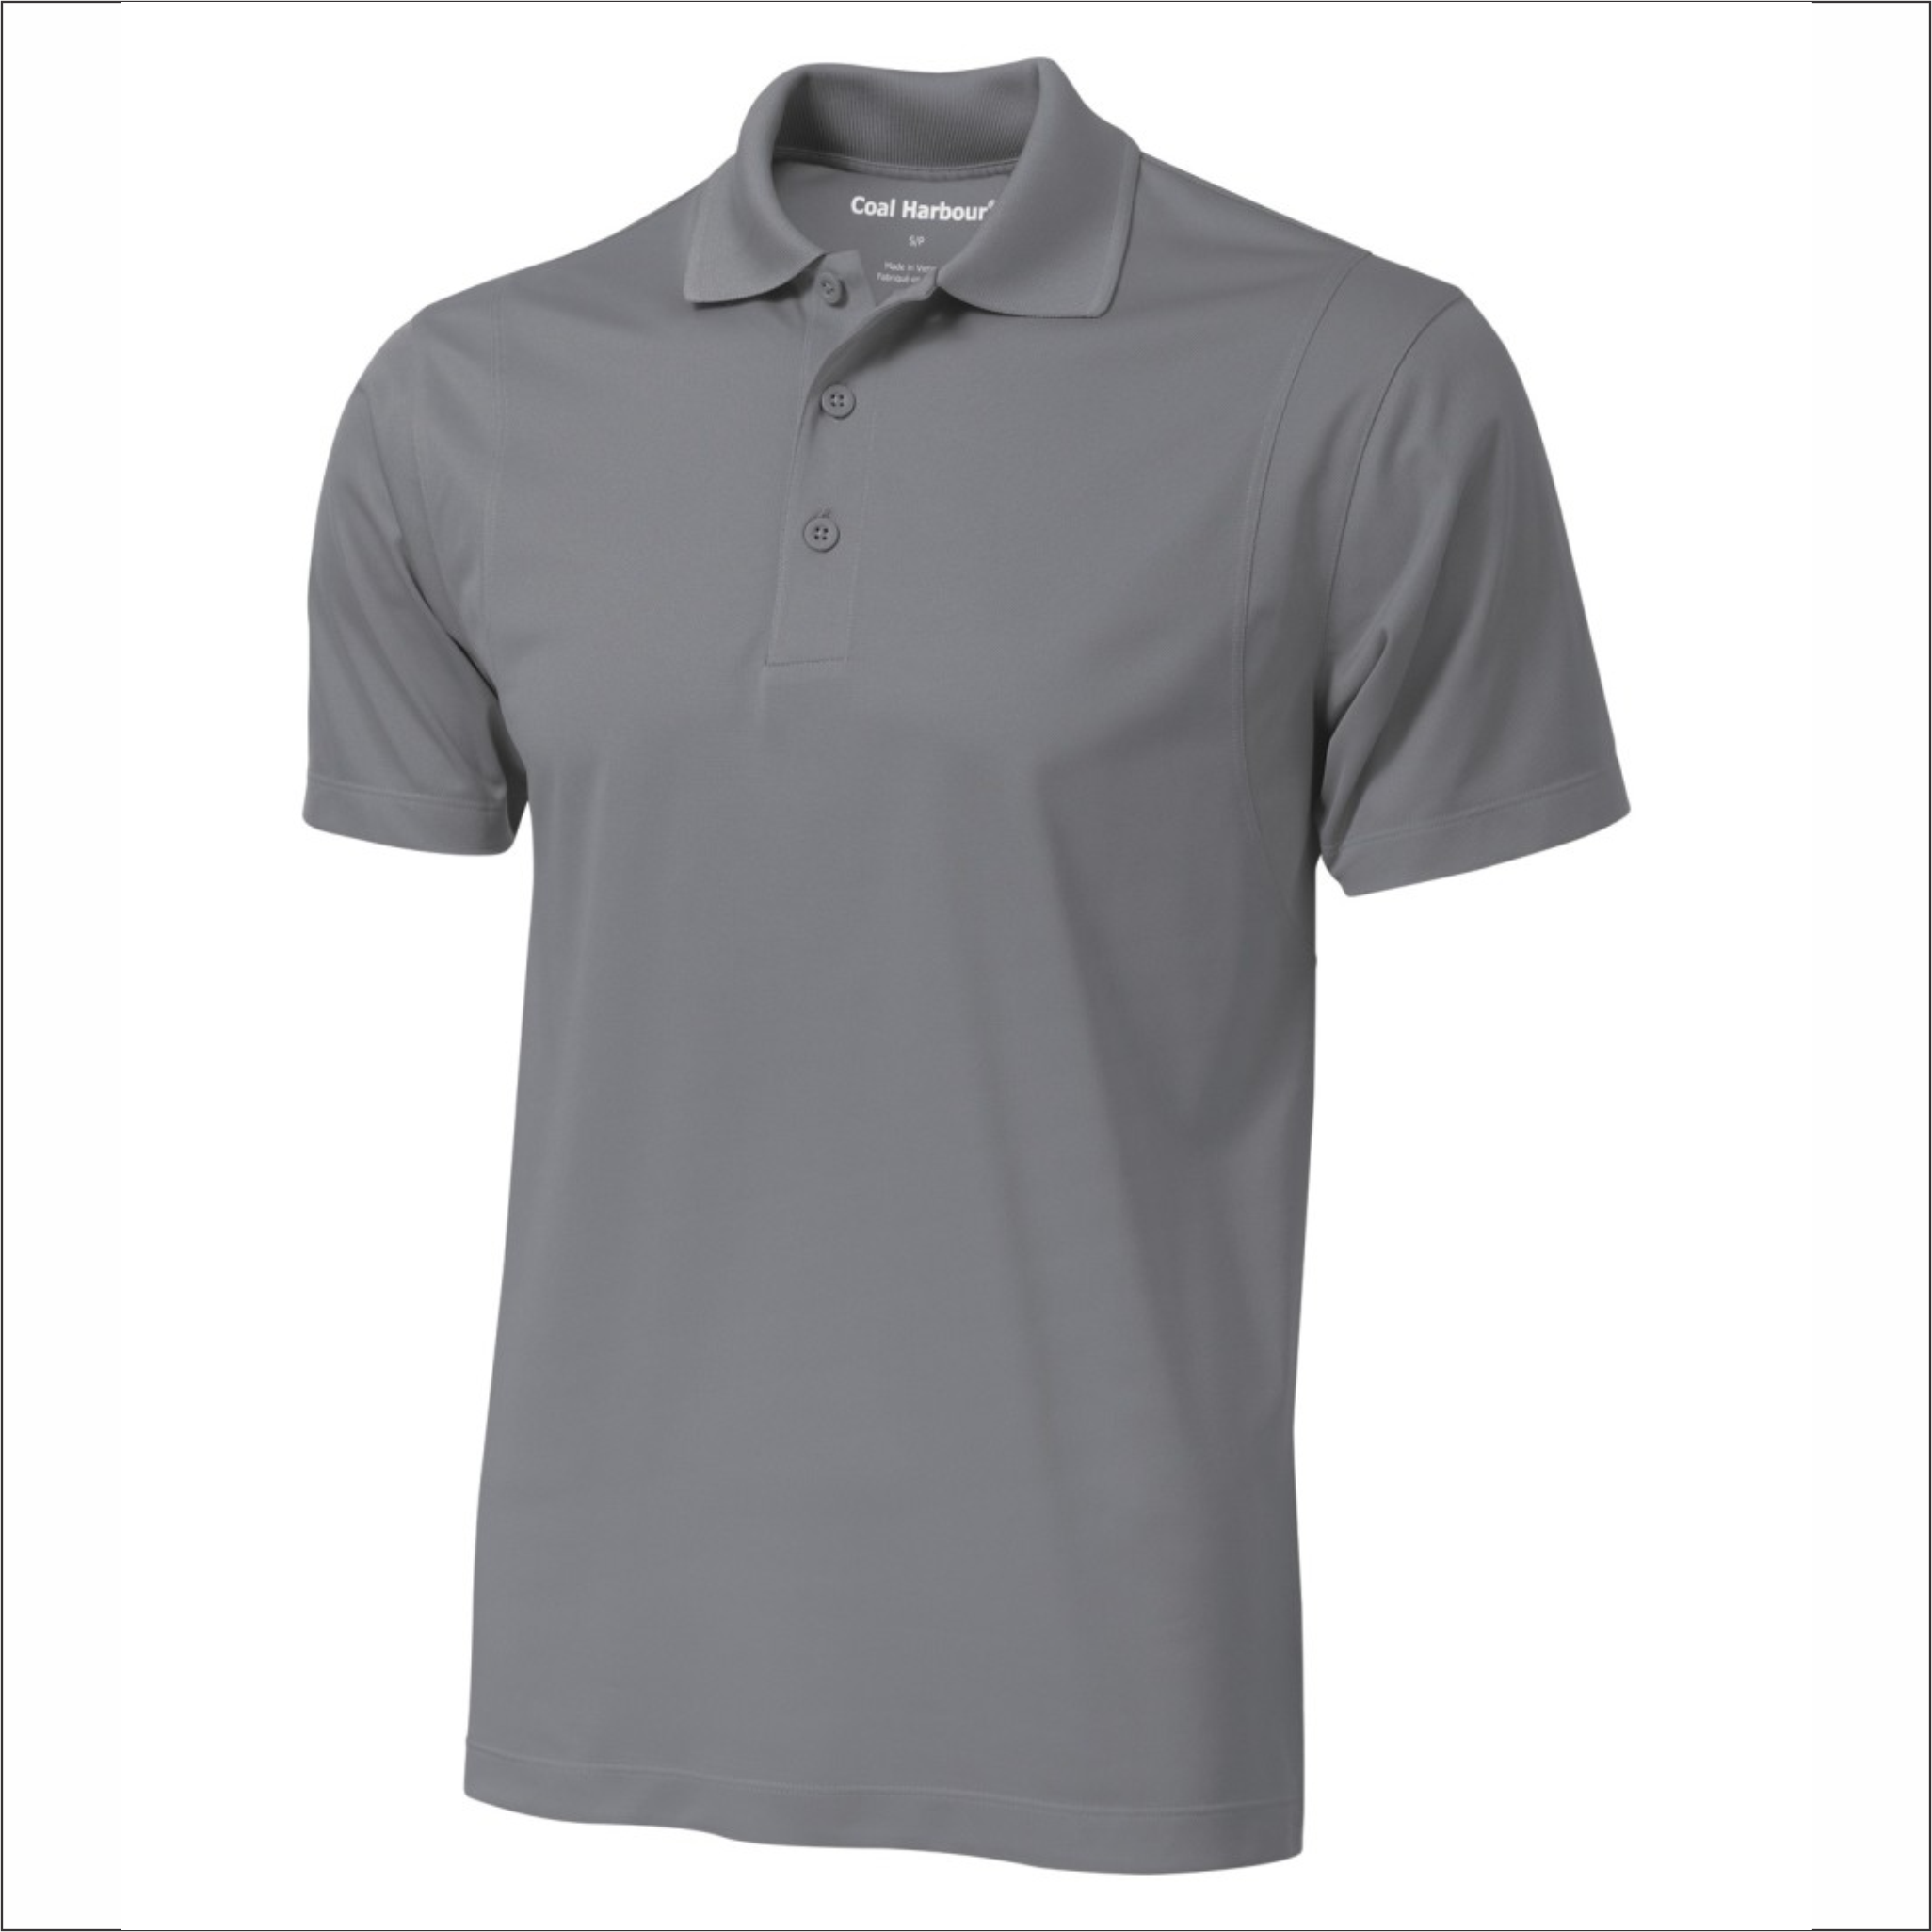 Snag Resistant - Men's Sport Shirt - Coal Harbour S445